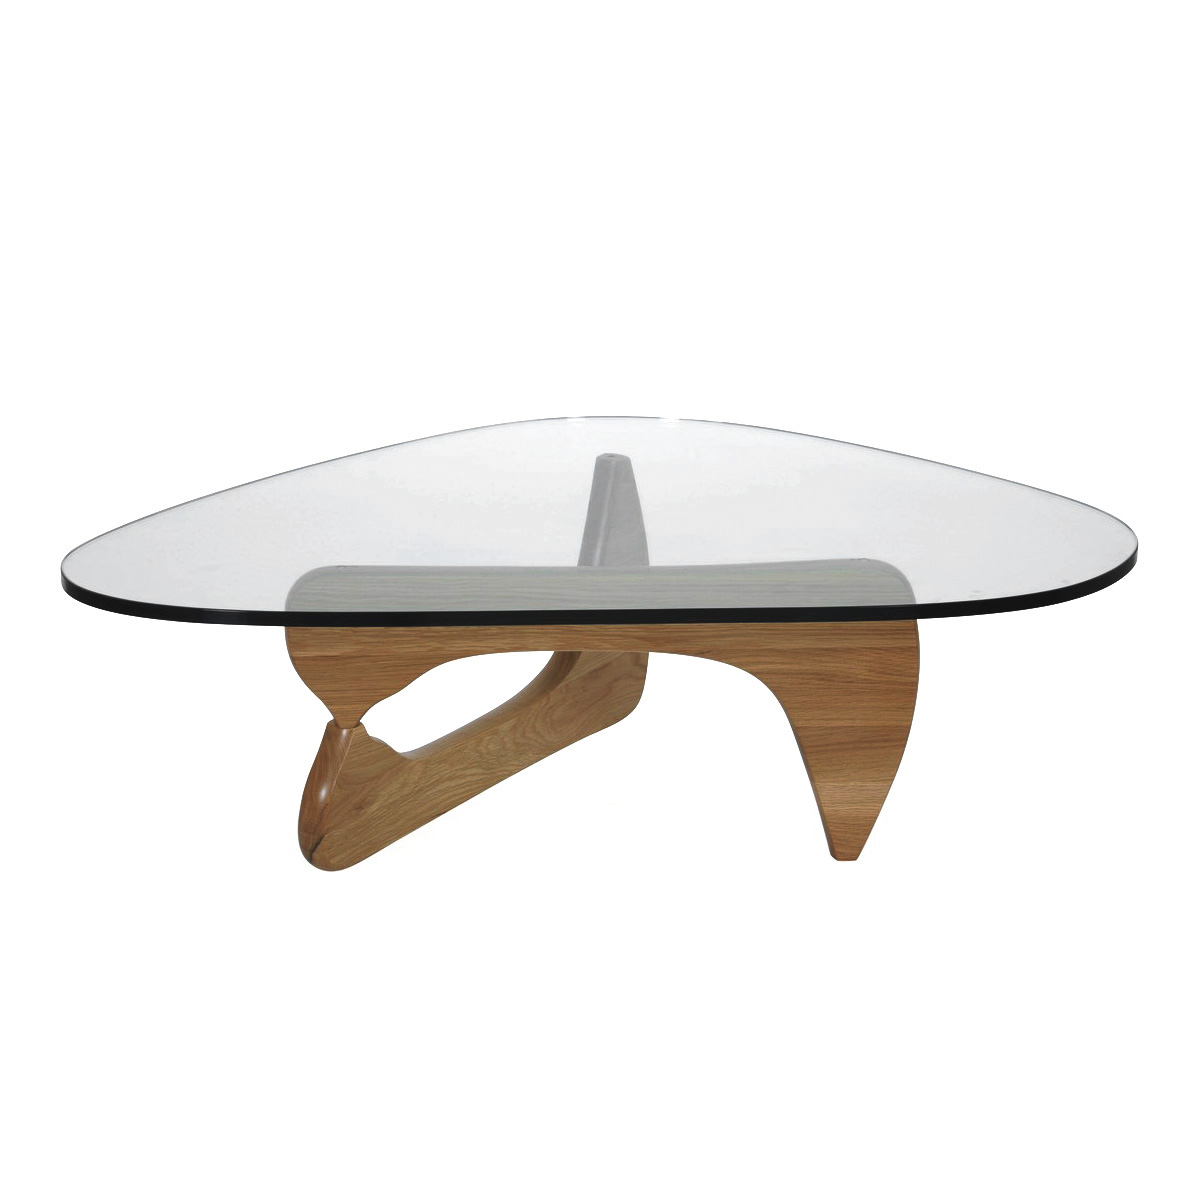 ITALSTUDIOGoccia Table 고치아 테이블(월넛)DESIGNED BY ITALY